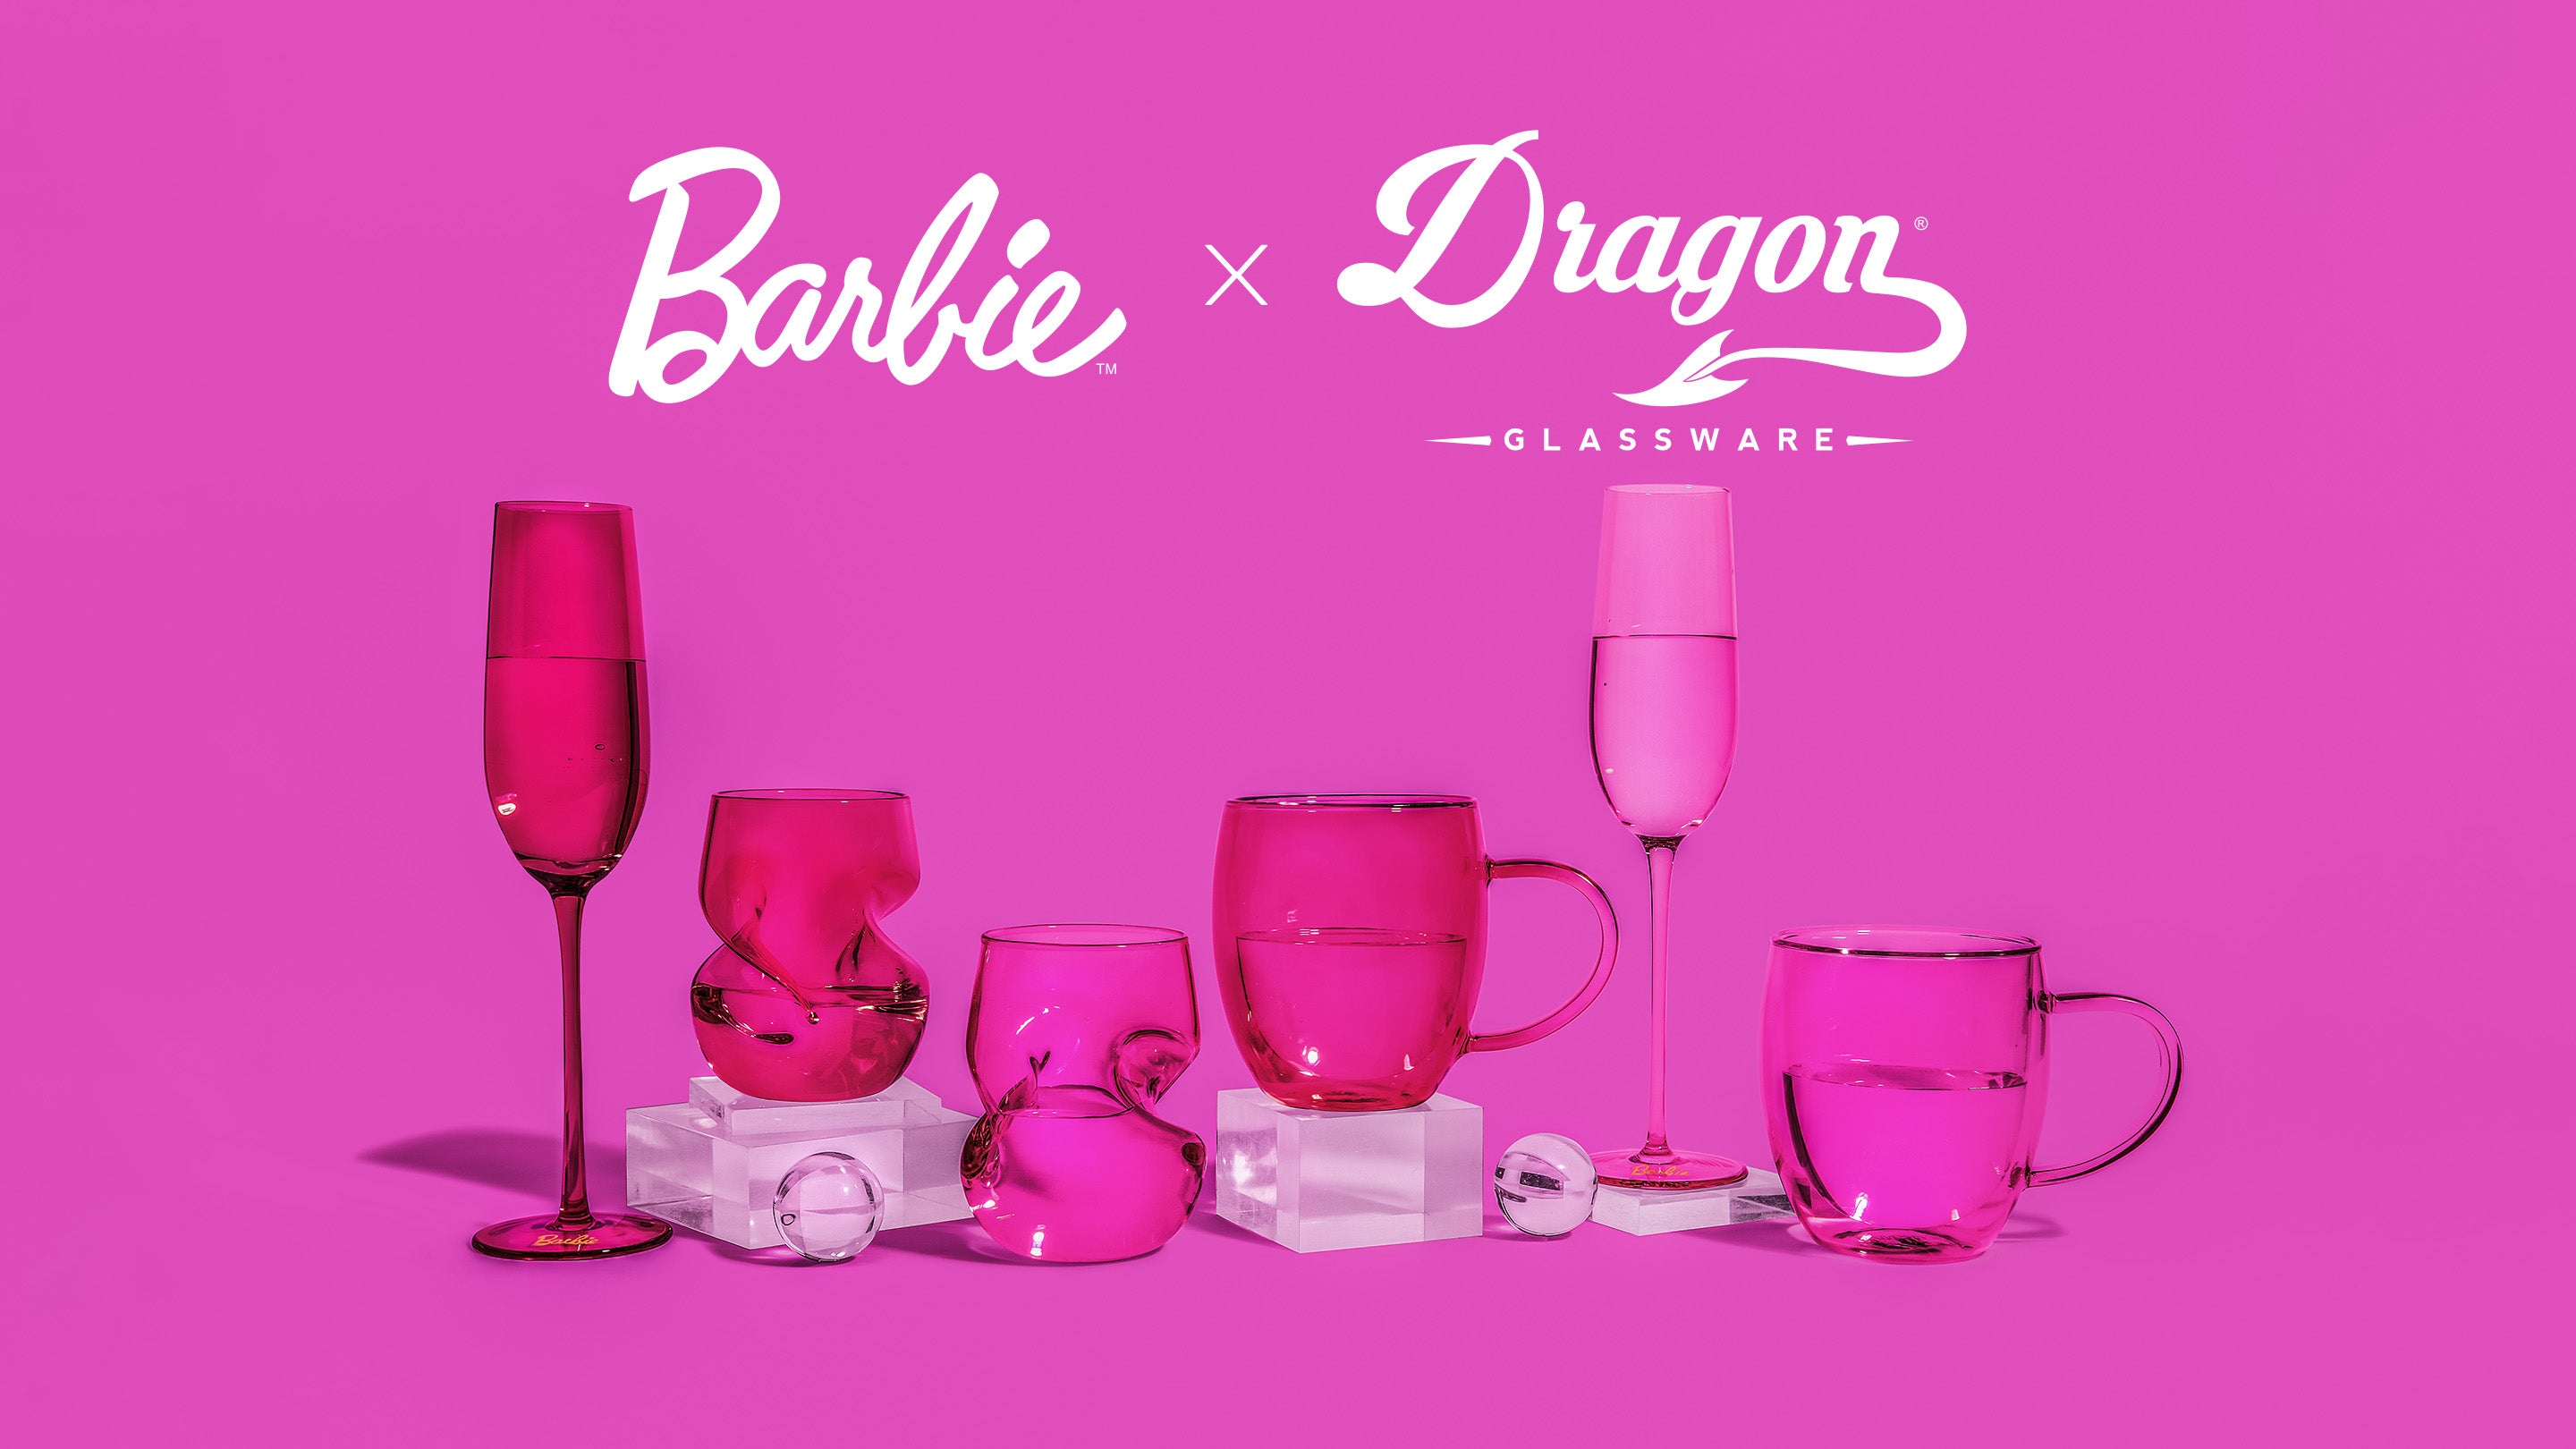 Barbie x Dragon Glassware Stemless Martini Glasses